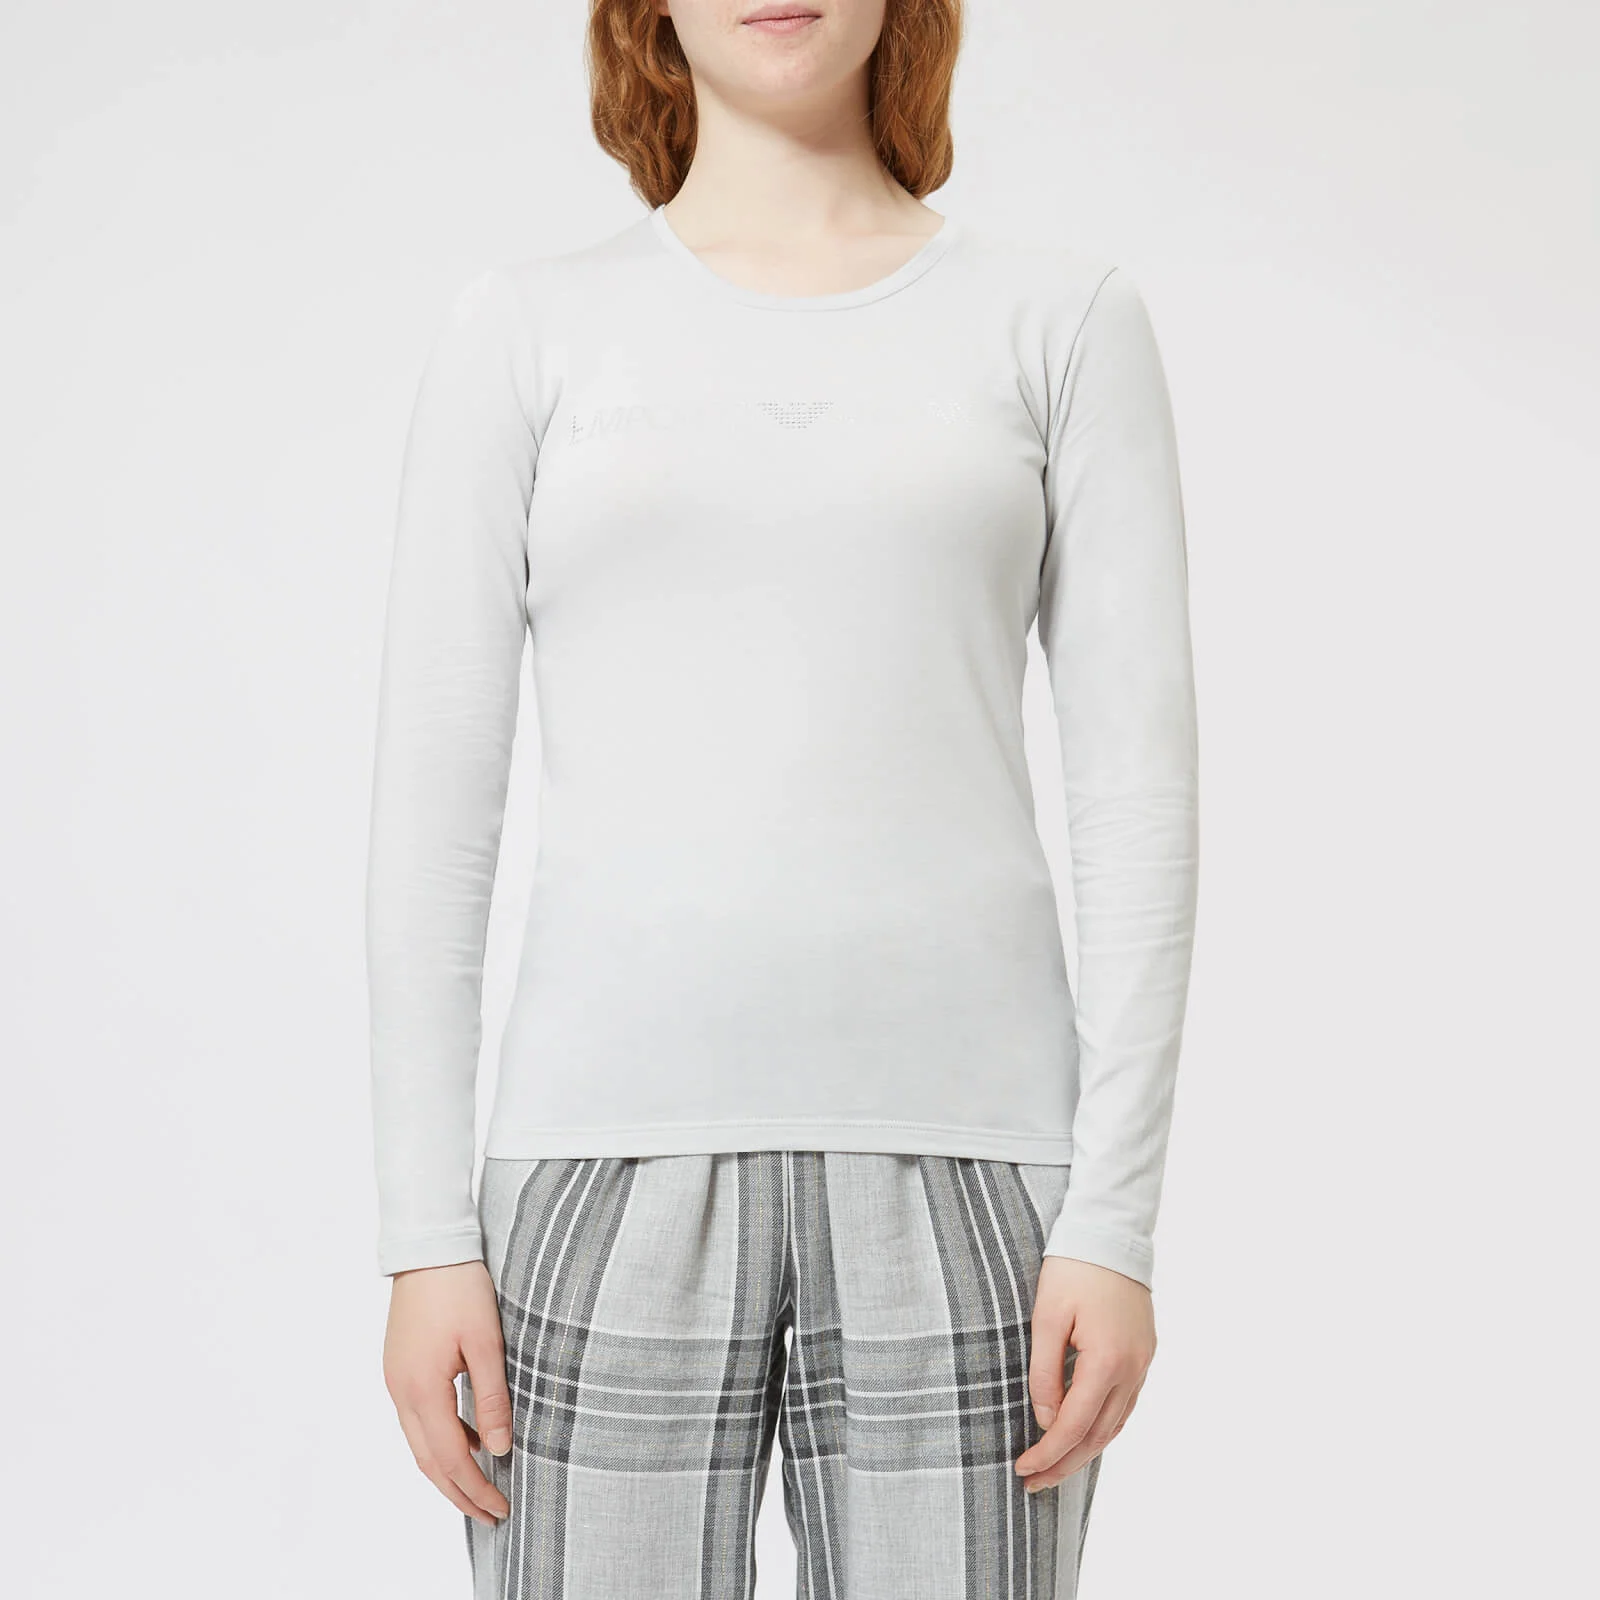 Emporio Armani Women's Basic Cotton Long Sleeve T-Shirt - Silver Image 1